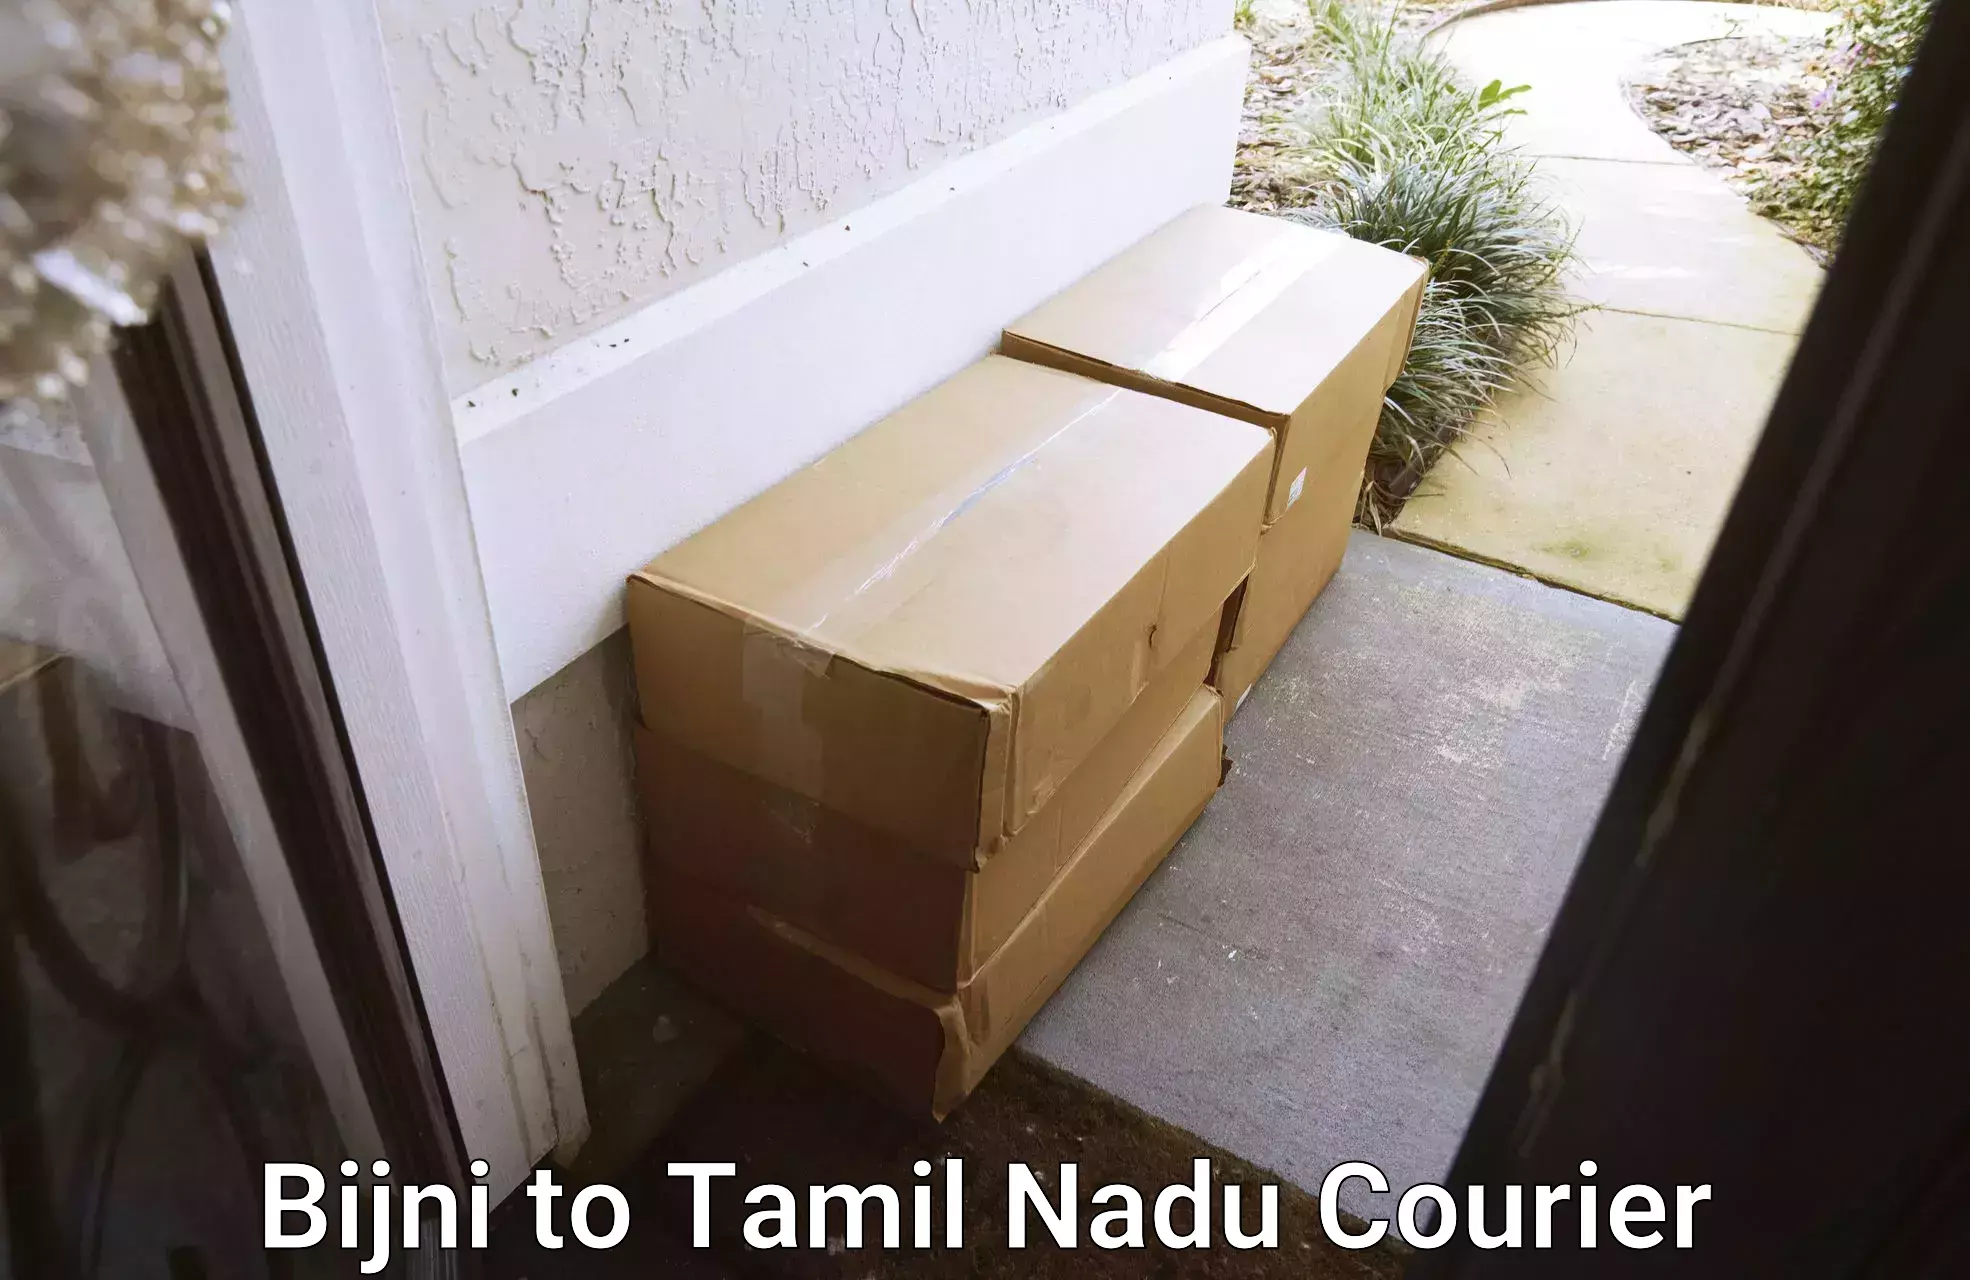 Efficient shipping operations Bijni to Tamil Nadu